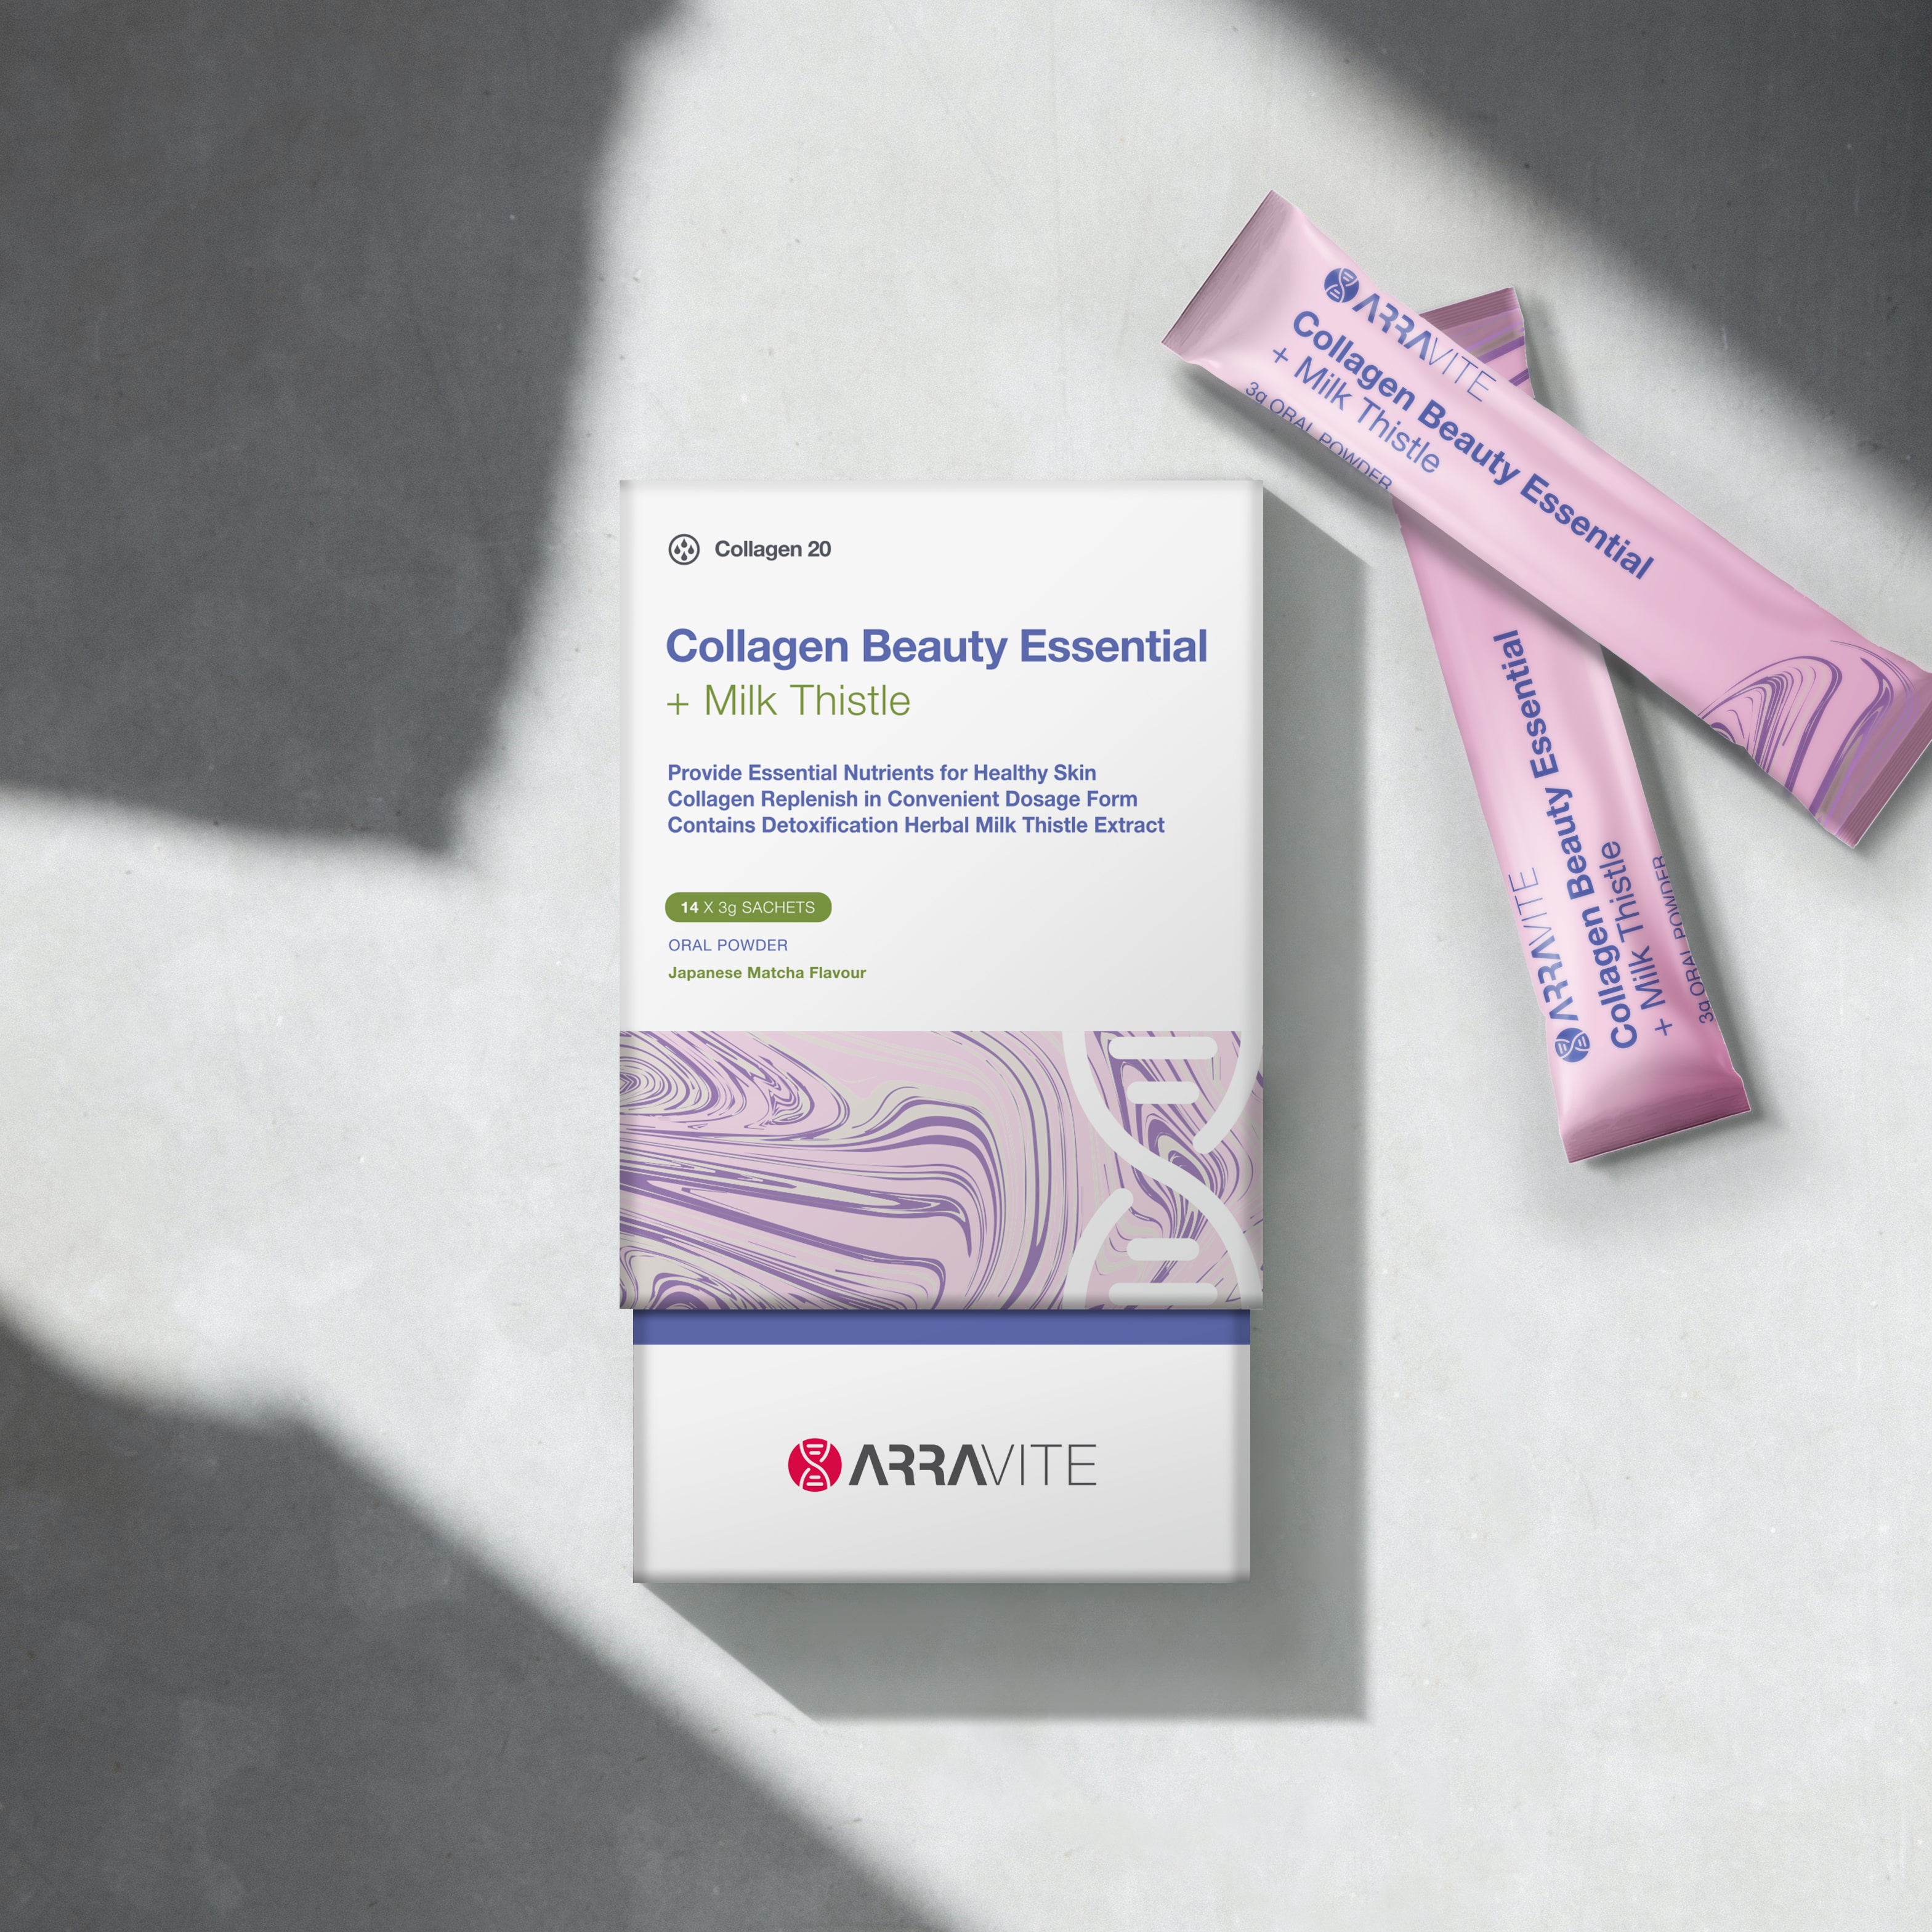 Collagen Beauty Essential + Milk Thistle (Japanese Matcha Flavour)